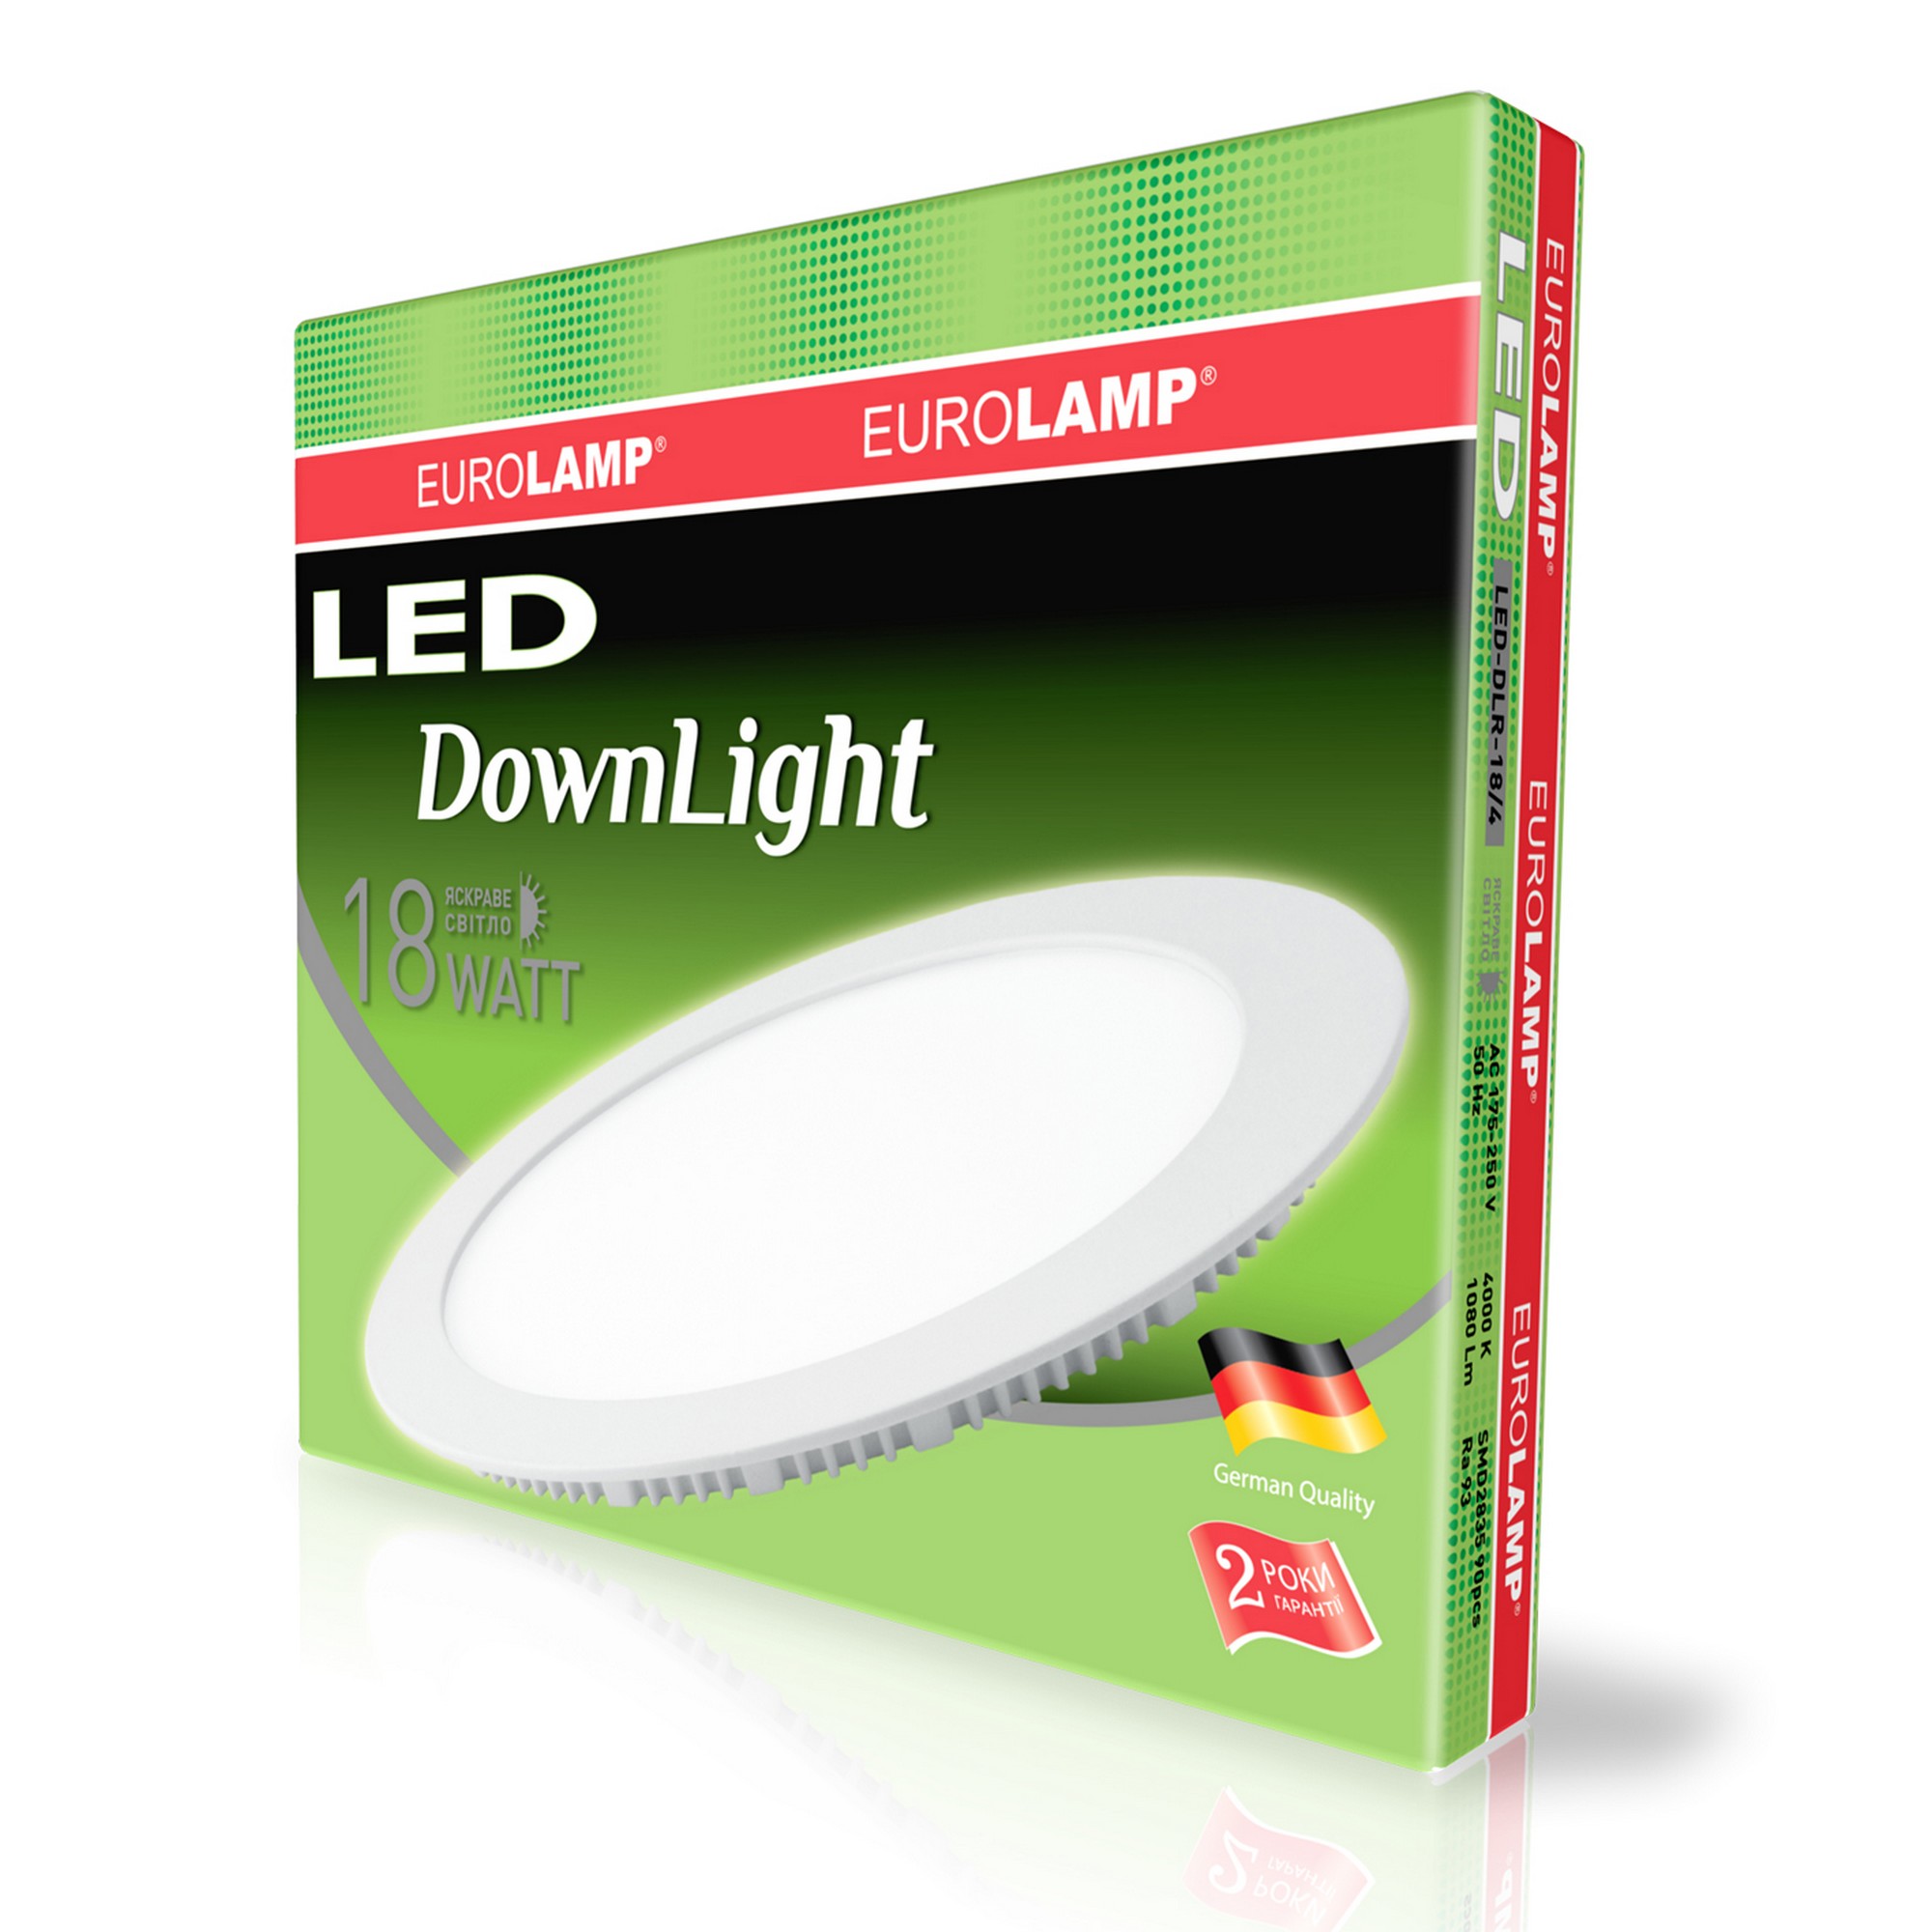 Eurolamp LED Downlight 18W 4000K круглый